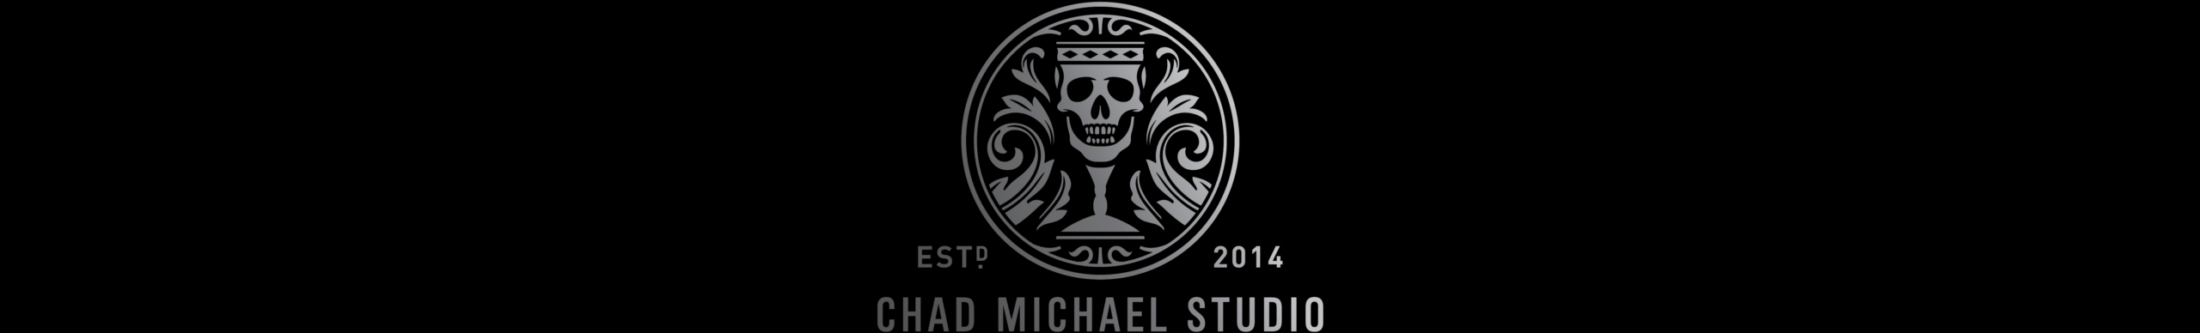 Chad-Michael-Studio